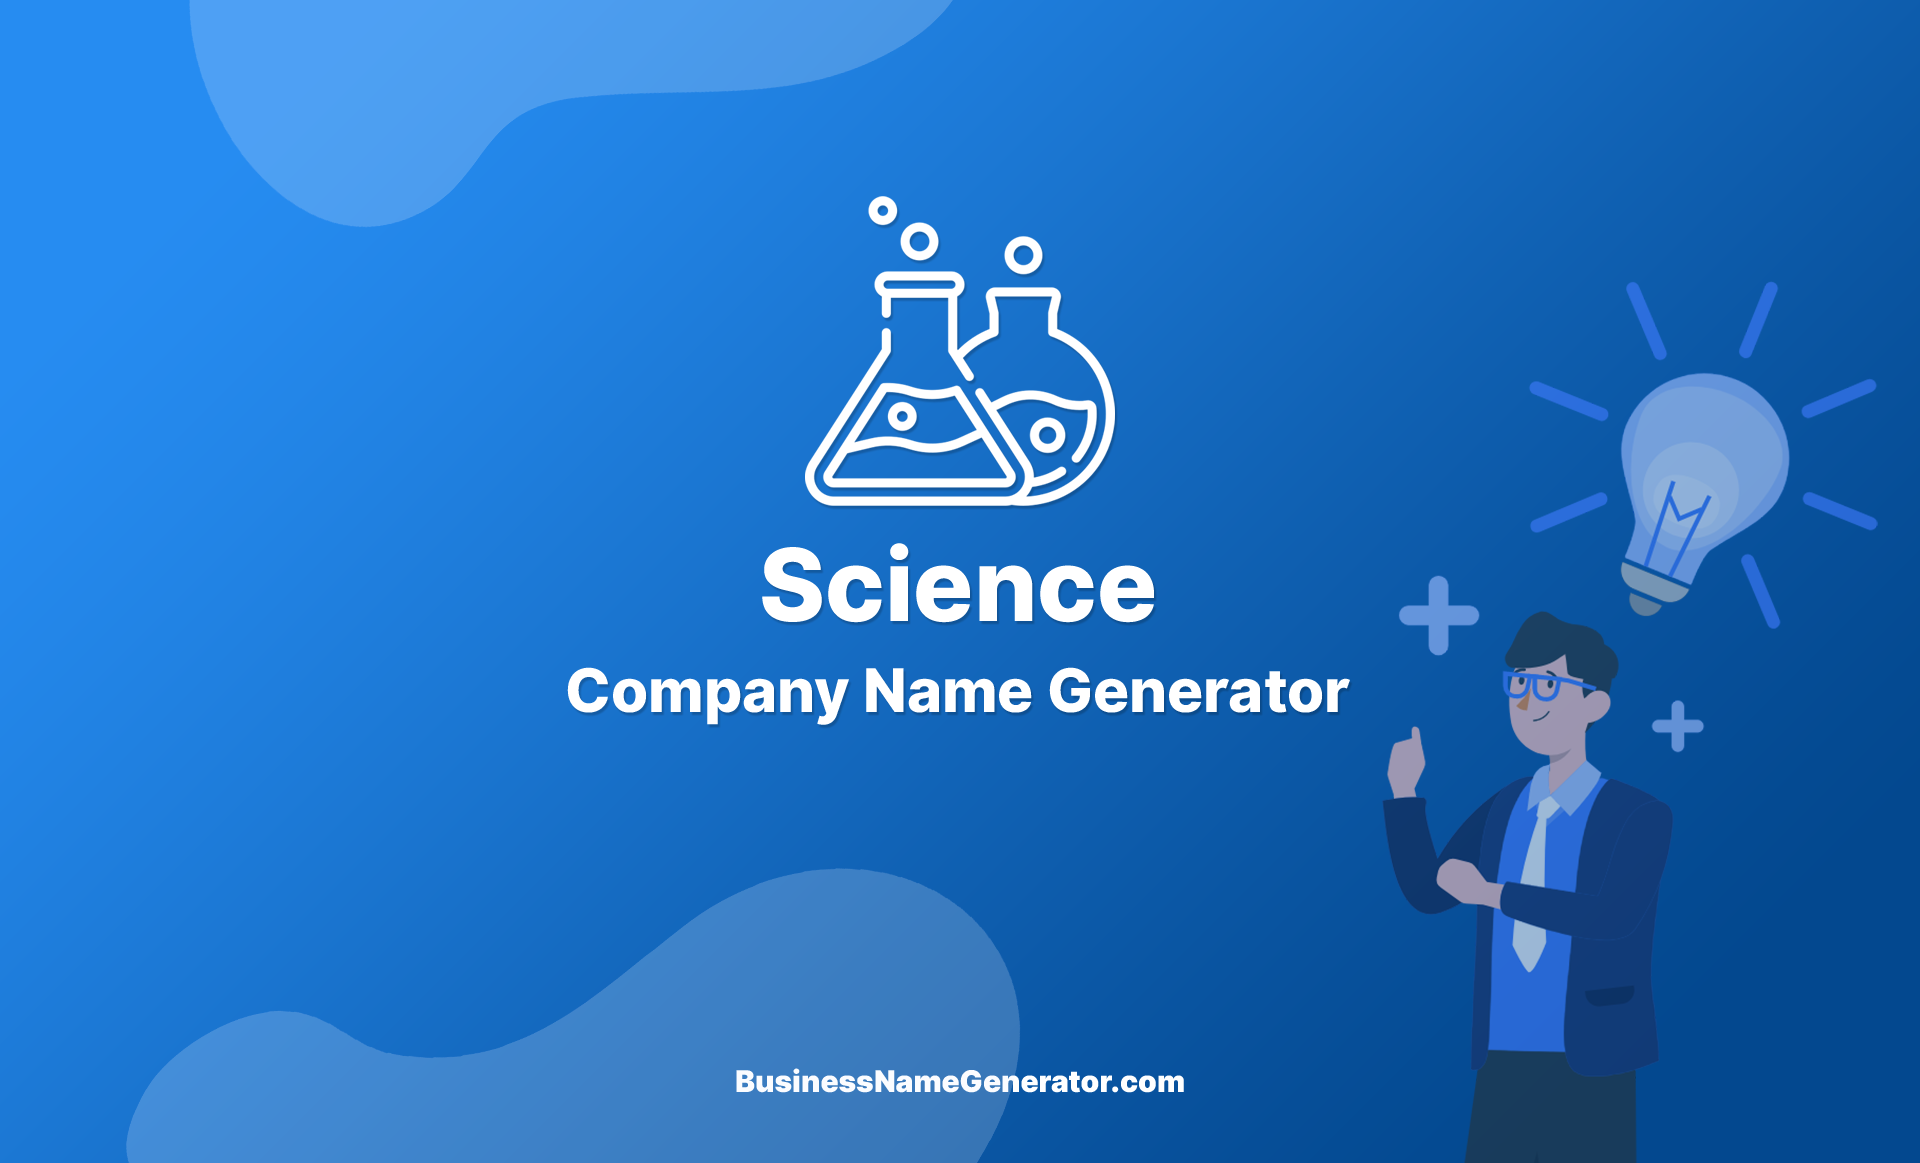 Science Company Name Generator